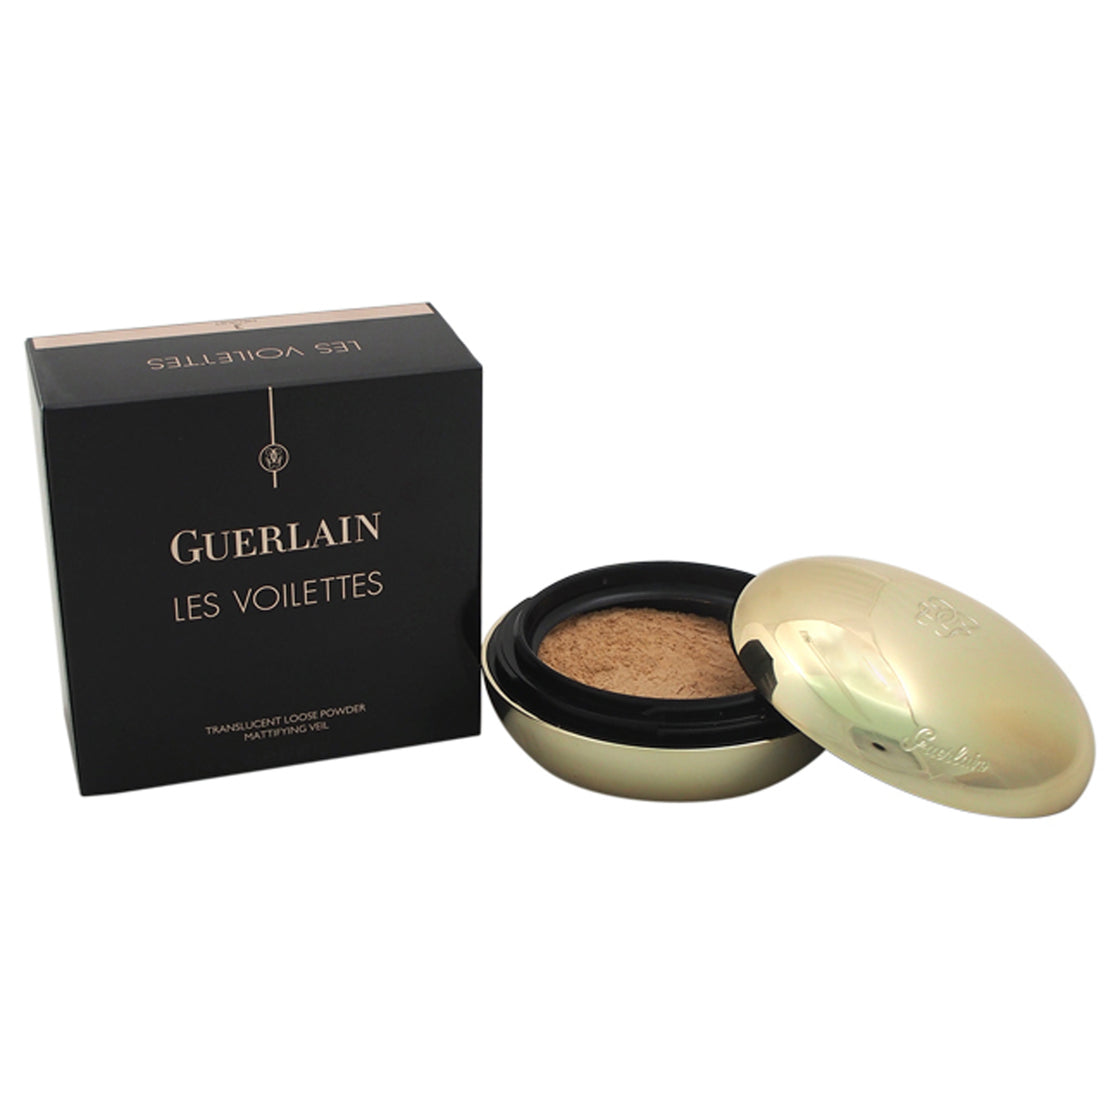 Les Voilettes Translucent Loose Powder Mattifying Veil - # 3 Medium by Guerlain for Women - 0.7 oz Powder